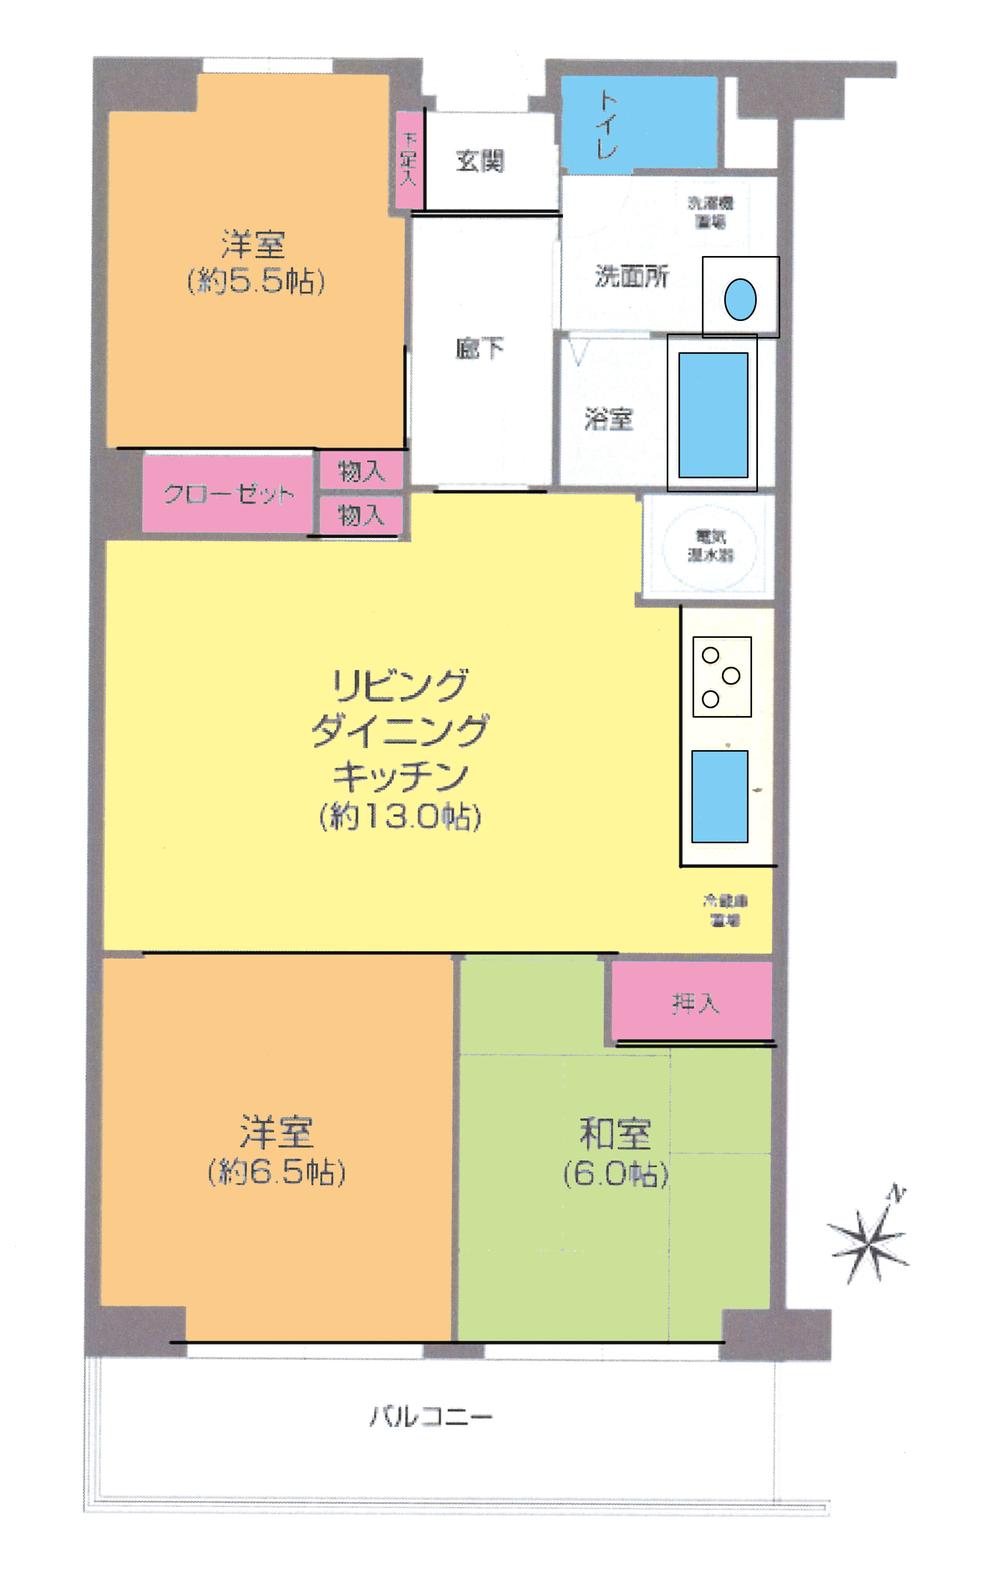 Floor plan. 3LDK, Price 10.8 million yen, Occupied area 71.61 sq m , Balcony area 8.4 sq m floor plan